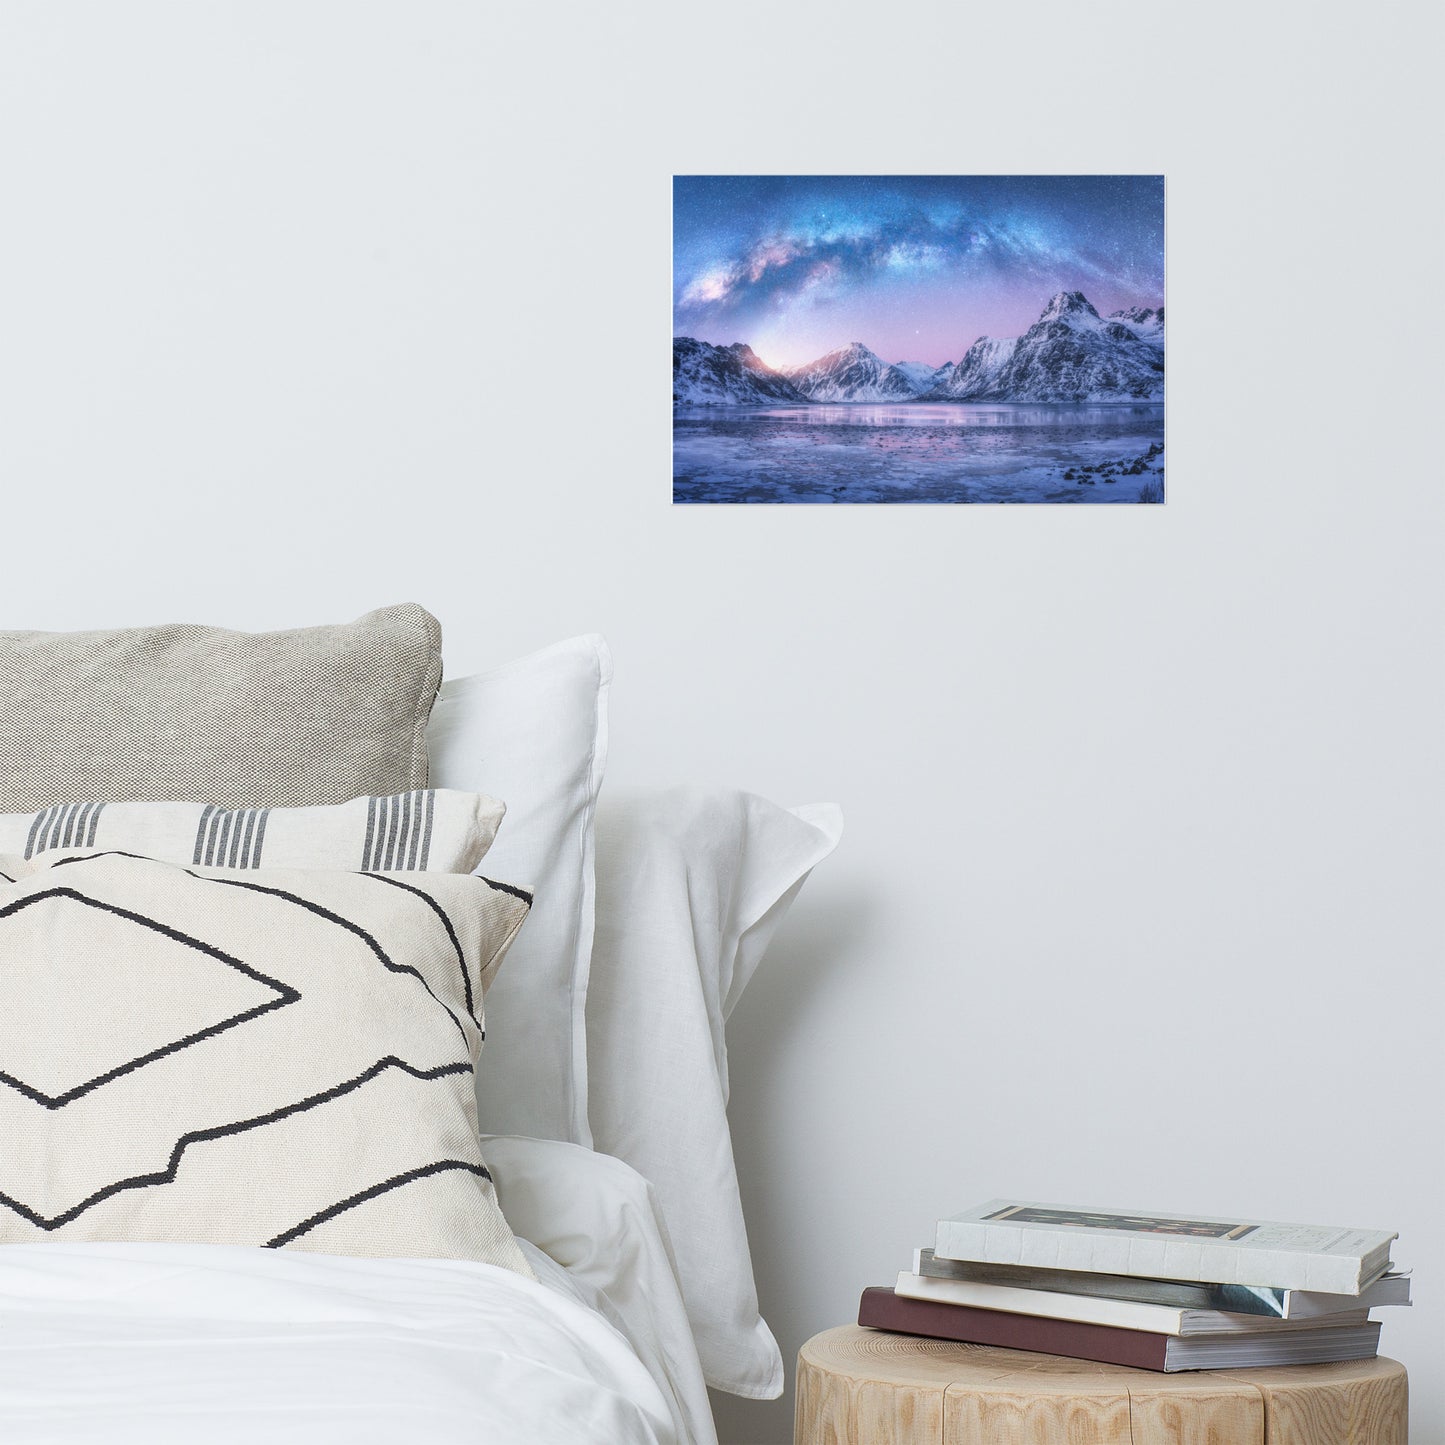 Milky Way Lofoten Islands, Norway Landscape Photo Loose Wall Art Prints